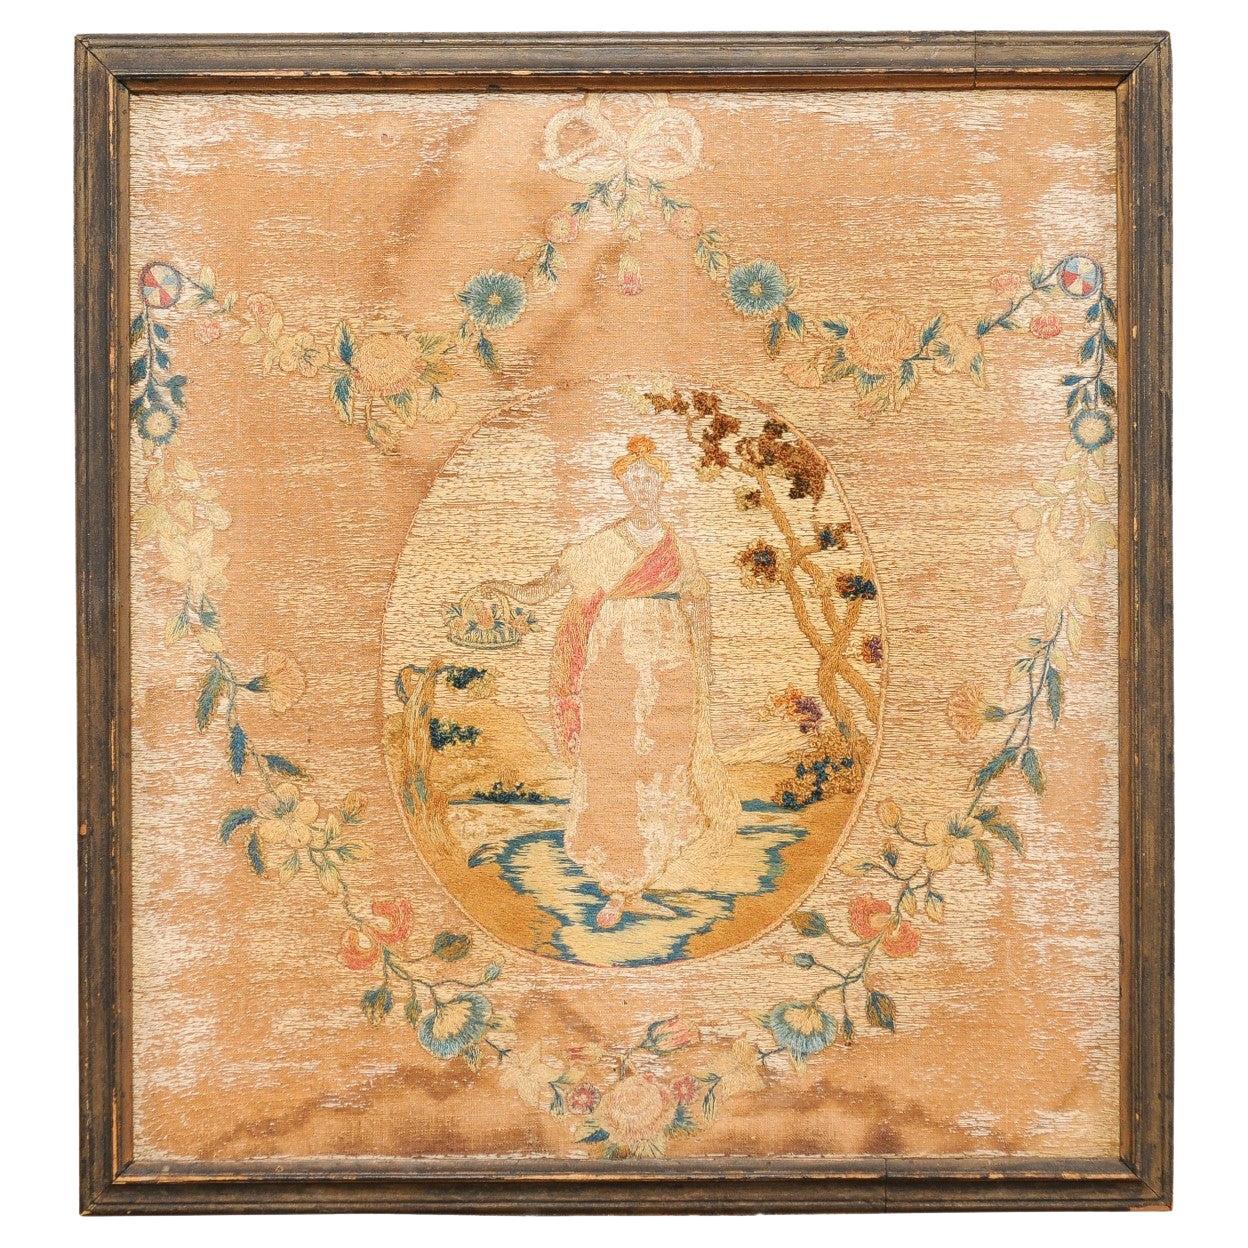  Framed 19th Century English Textile